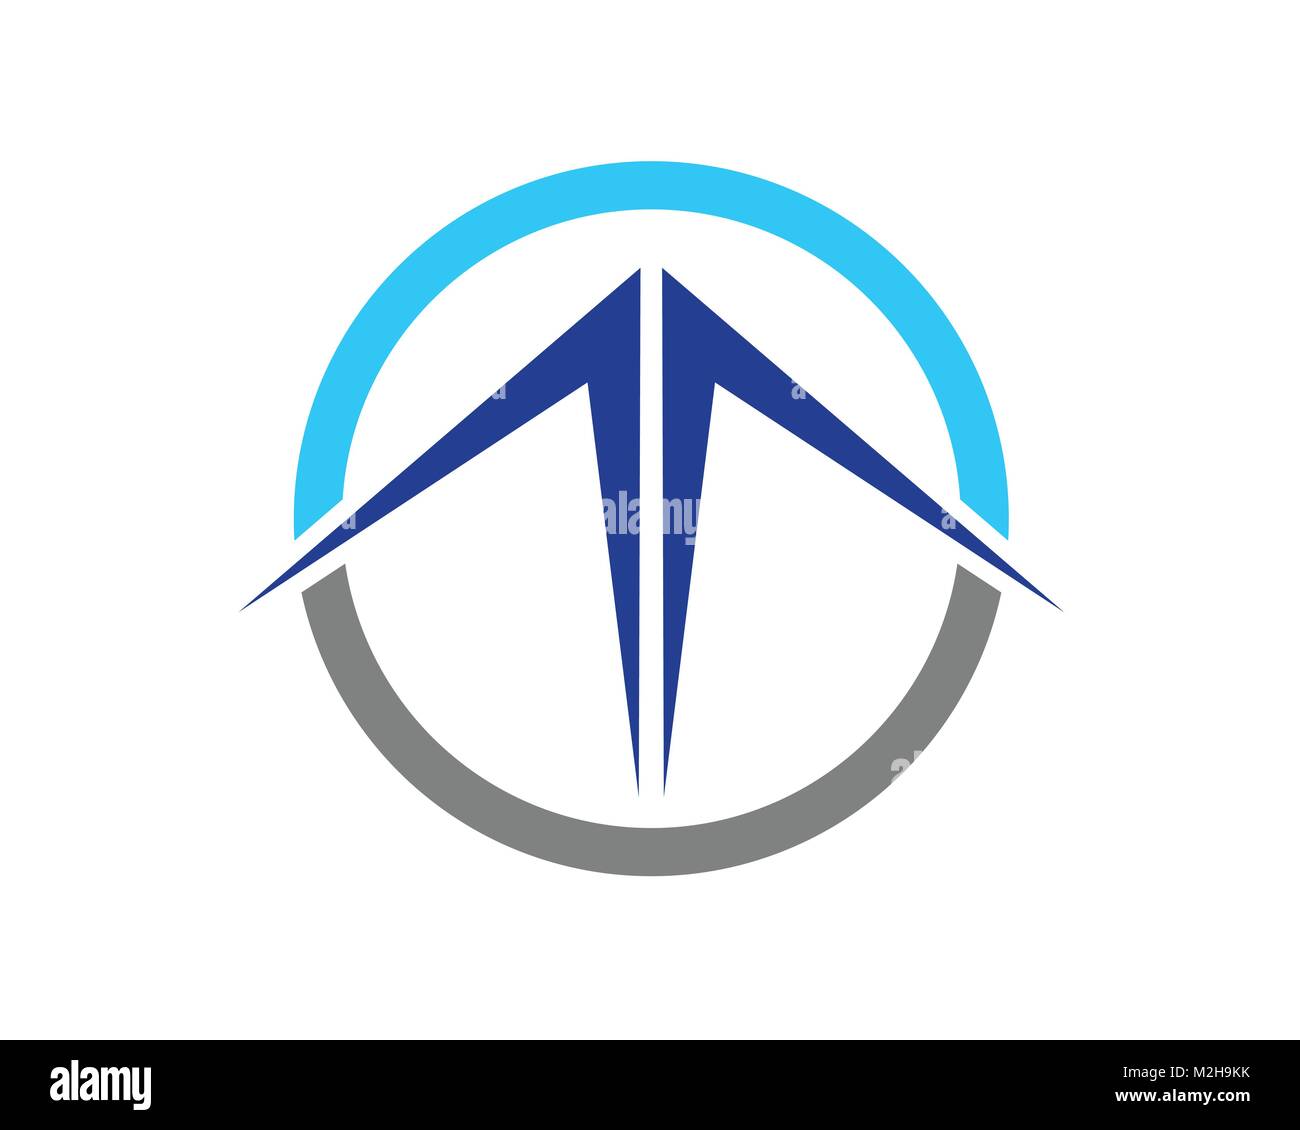 Abstract Blue Mountain Circle Emblem Stock Vector